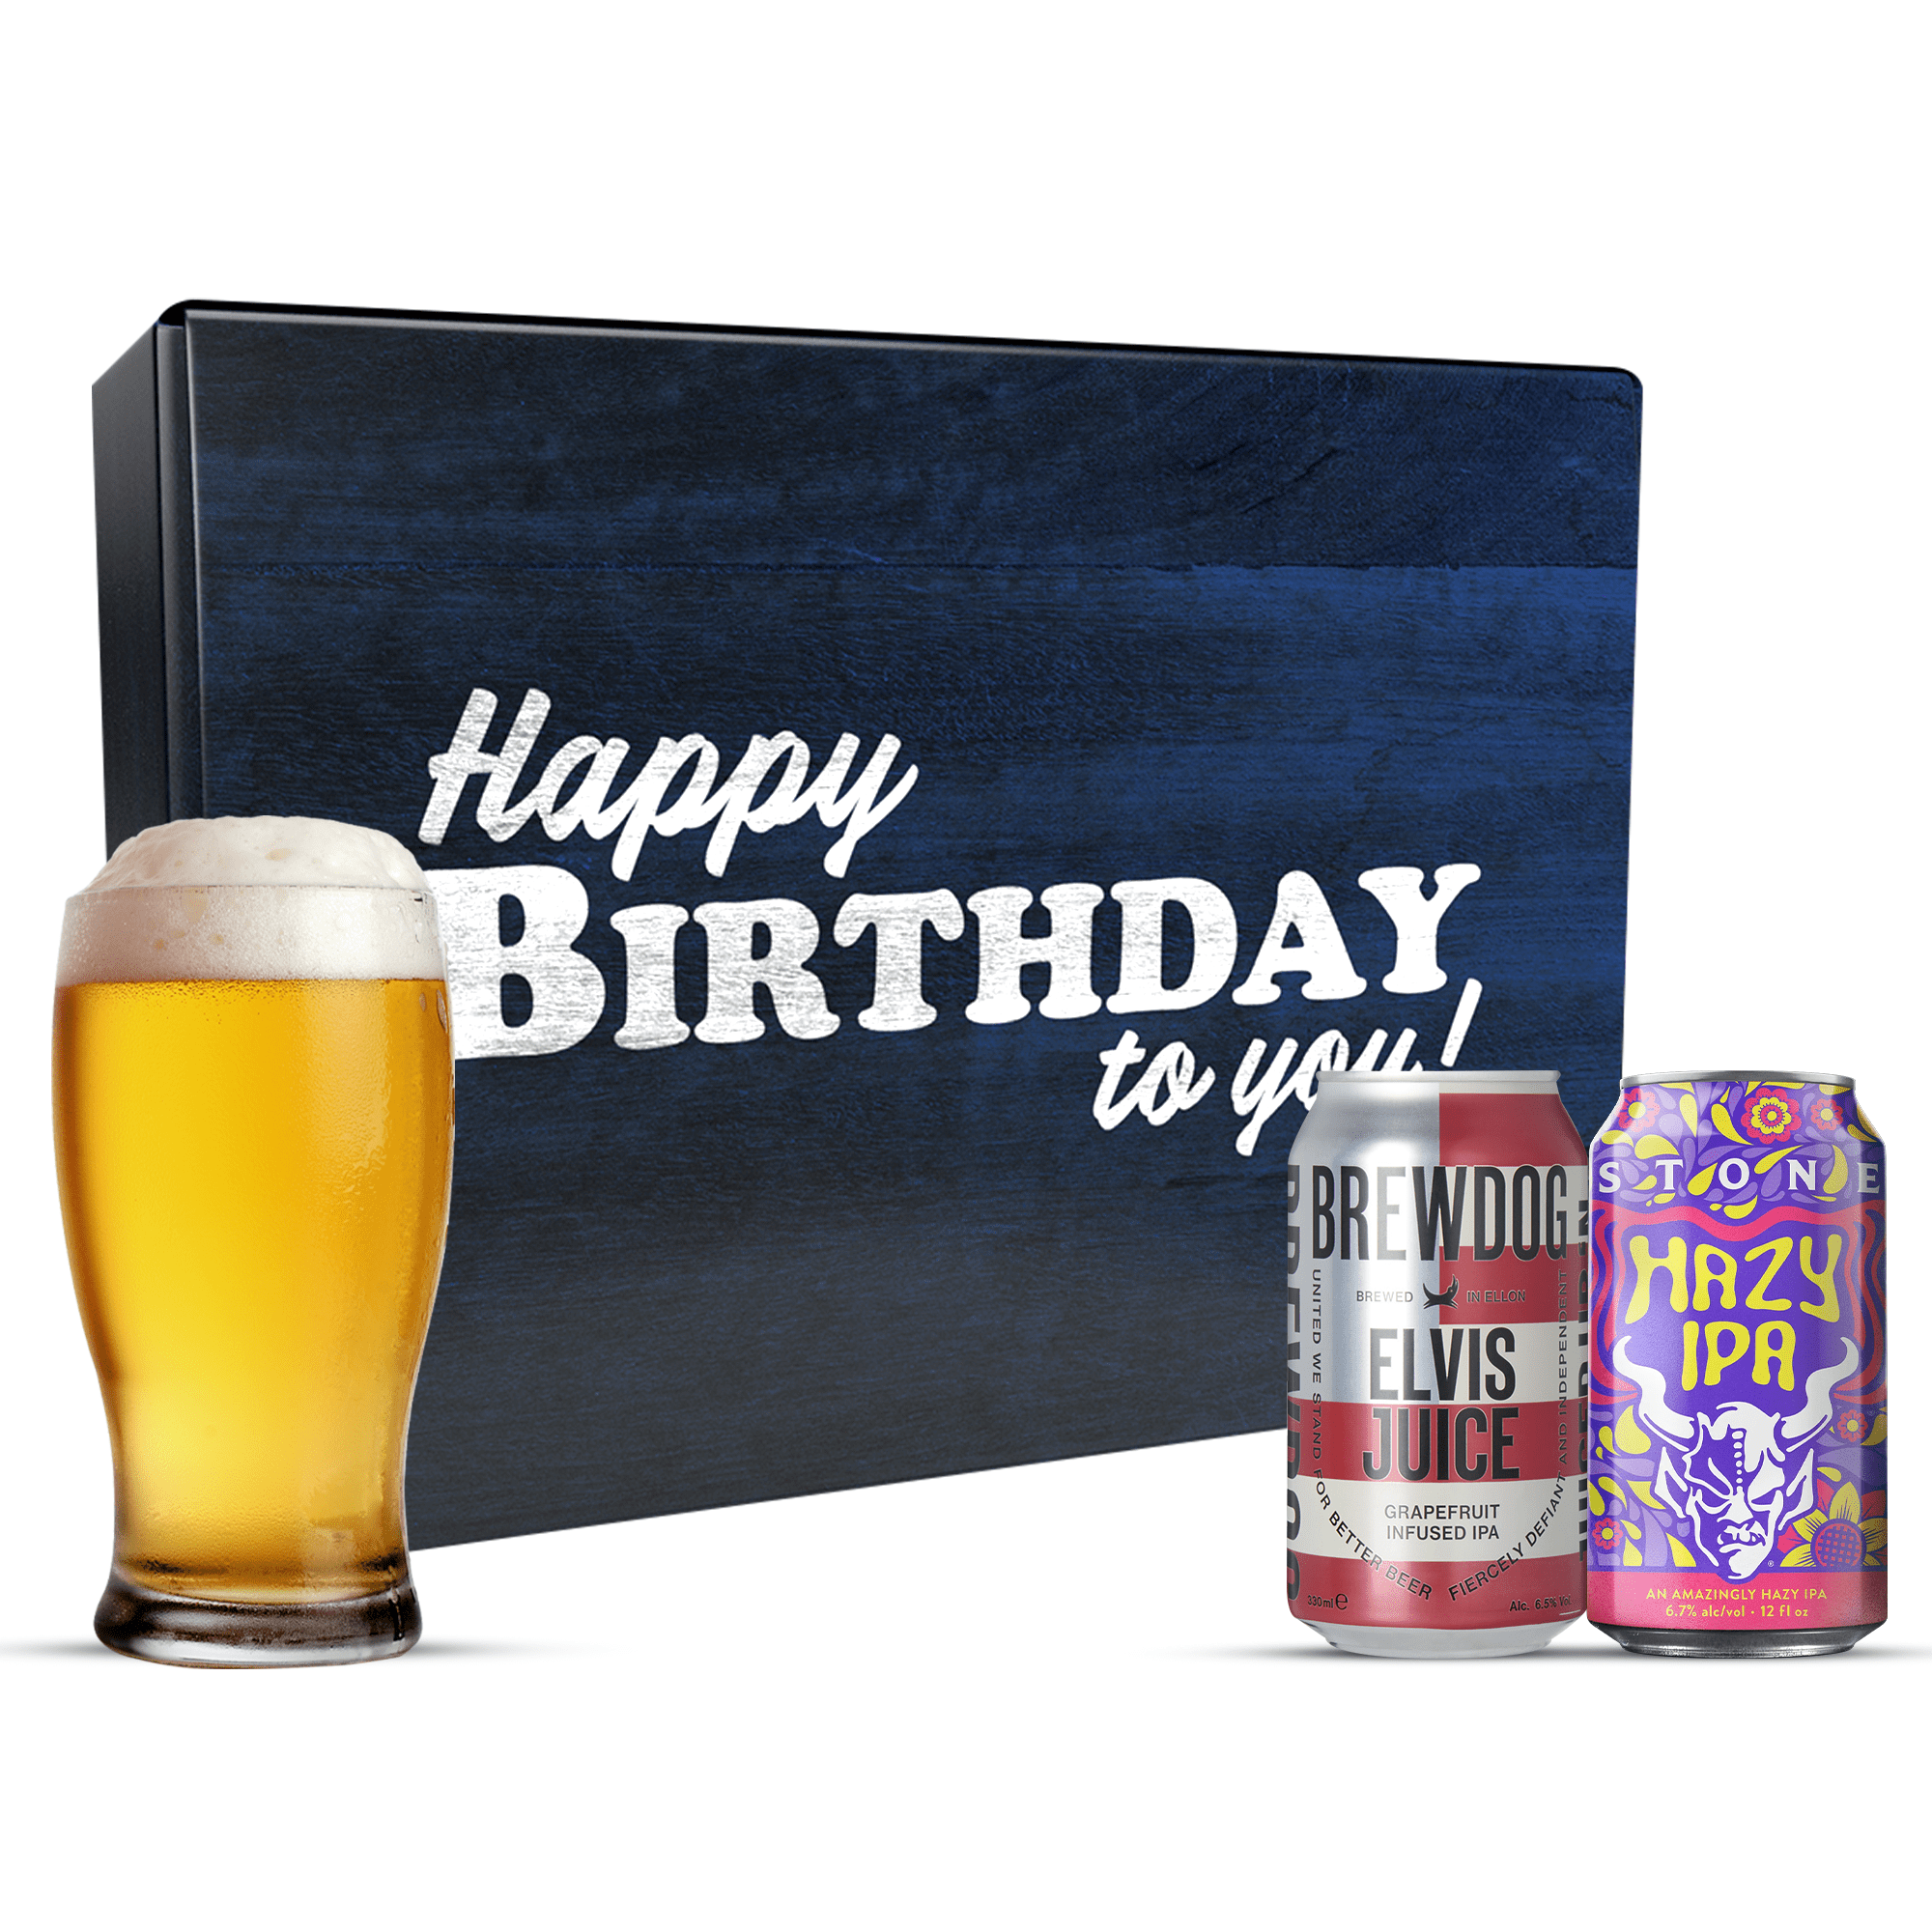 Happy Birthday with Beer, Beer Happy Birthday, Happy Birthday Beer